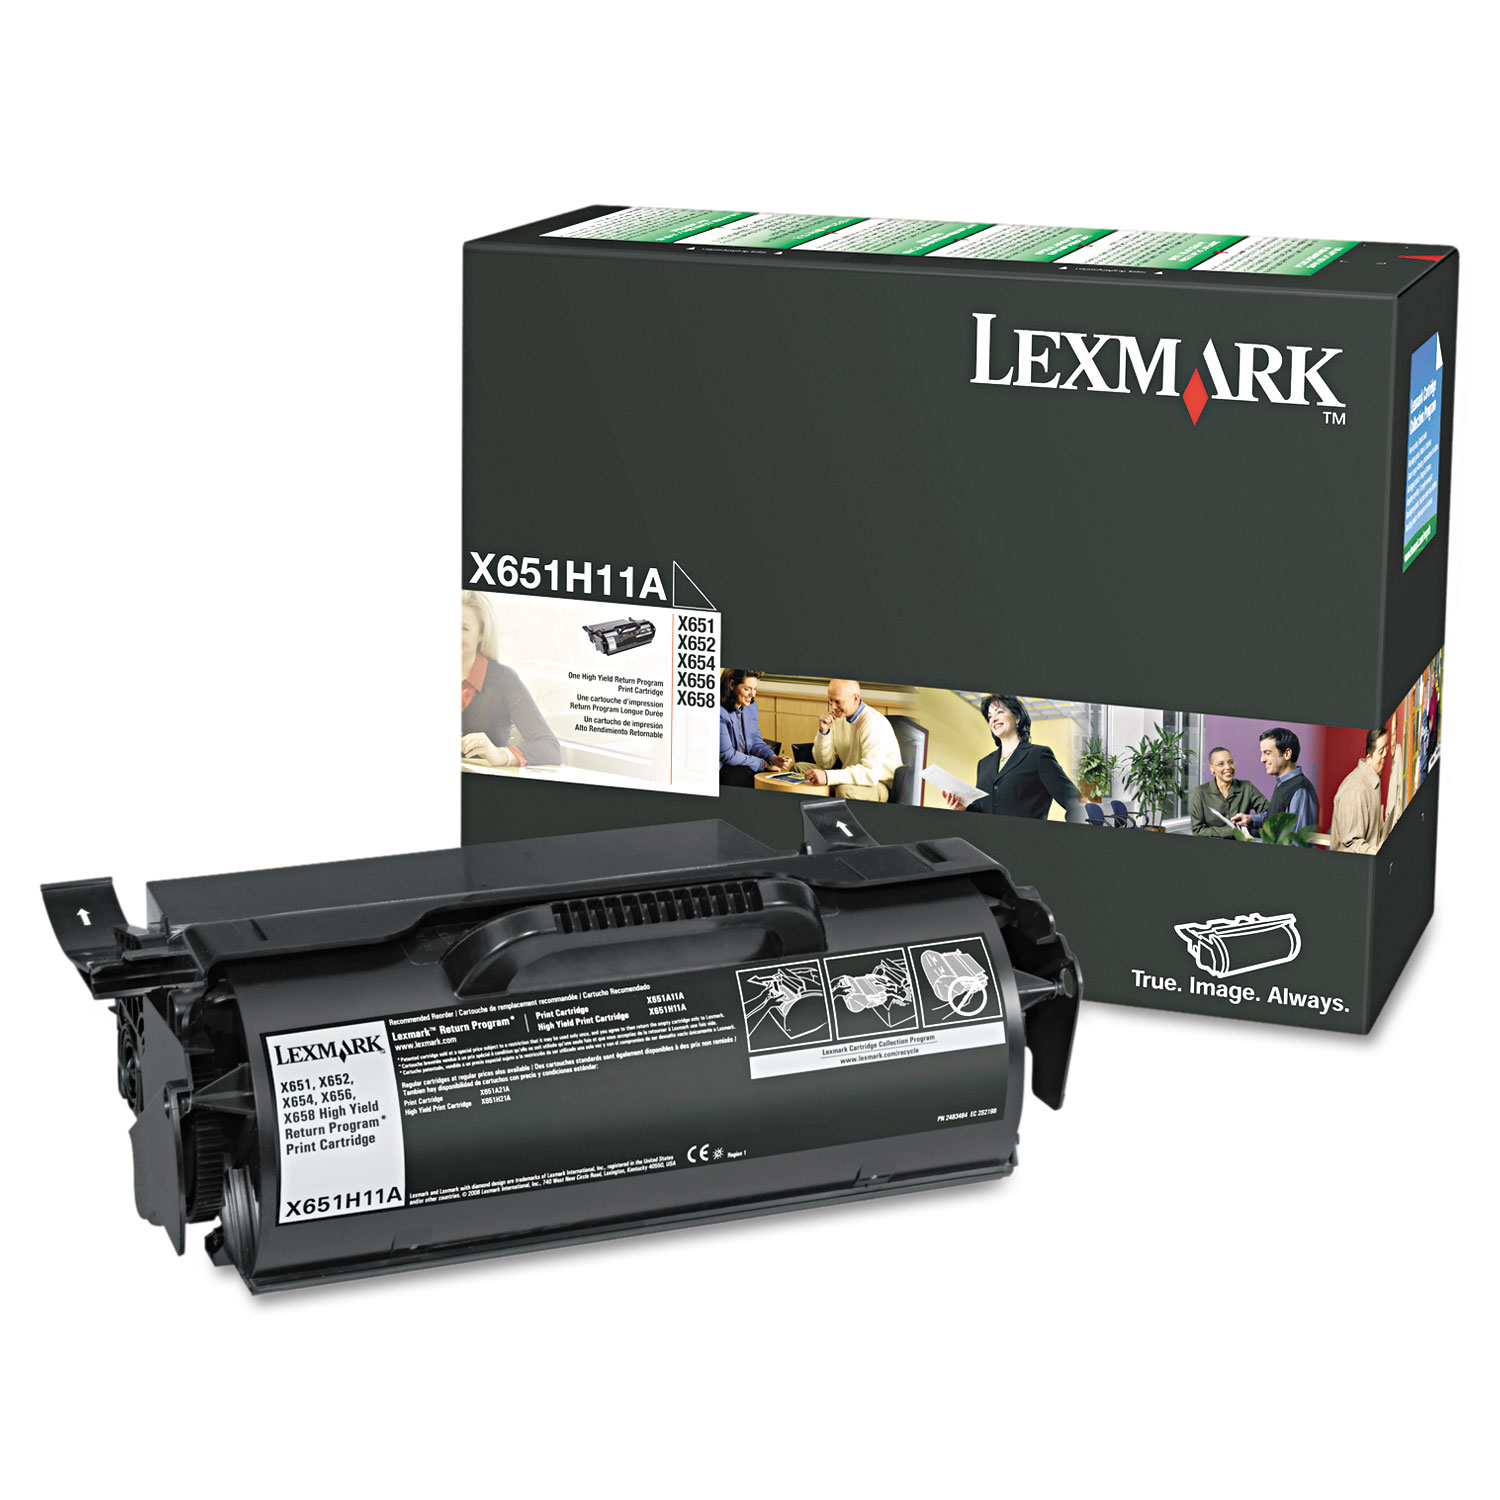  Lexmark X651H11A X651H11A Return Program High-Yield Toner, 25000 Page-Yield, Black (LEXX651H11A) 